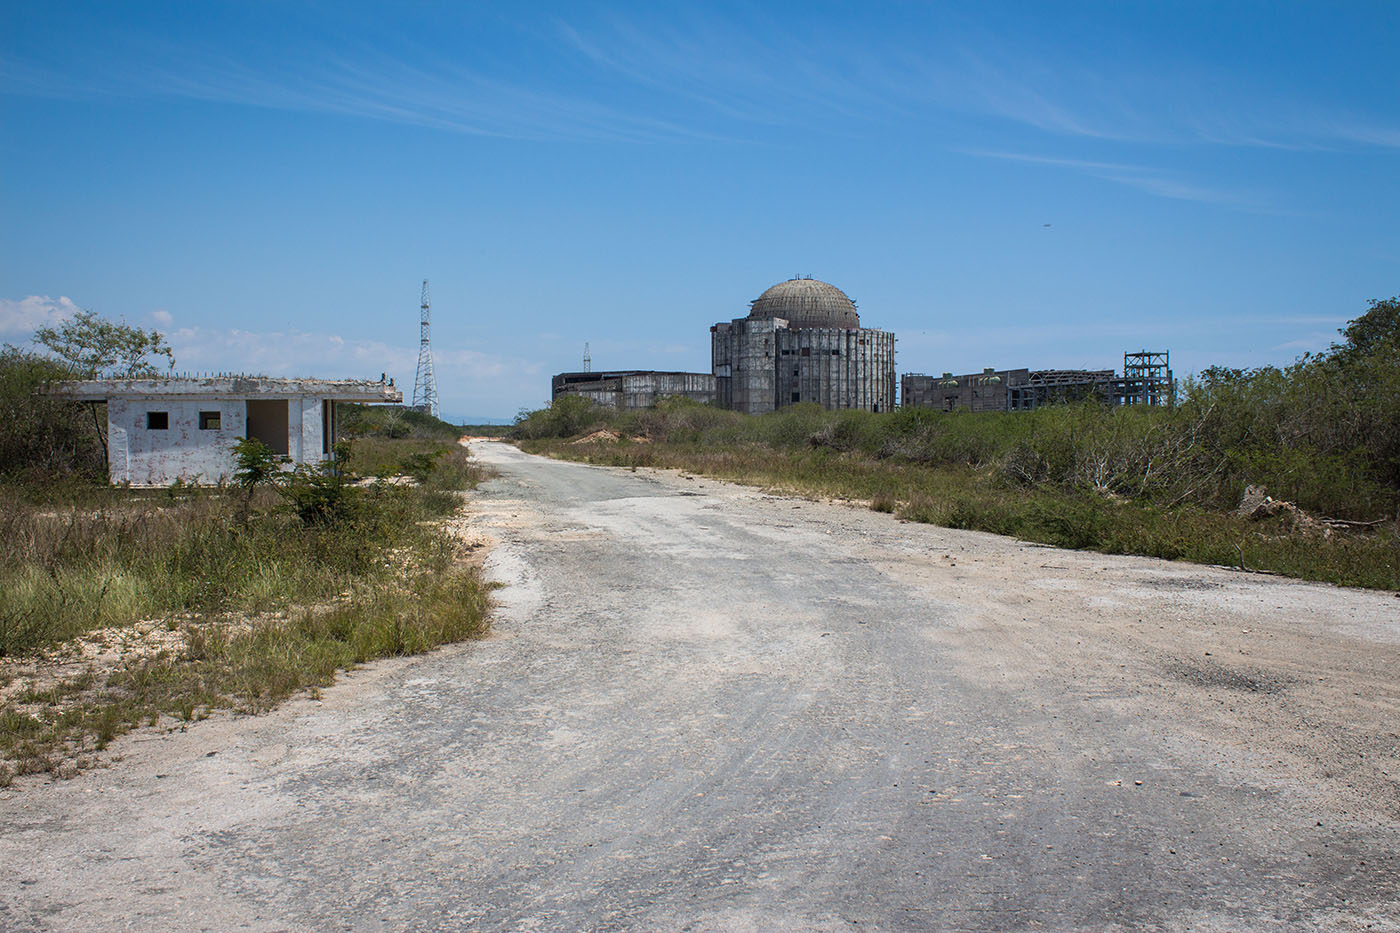 The Juragua Power Plant, Cuba